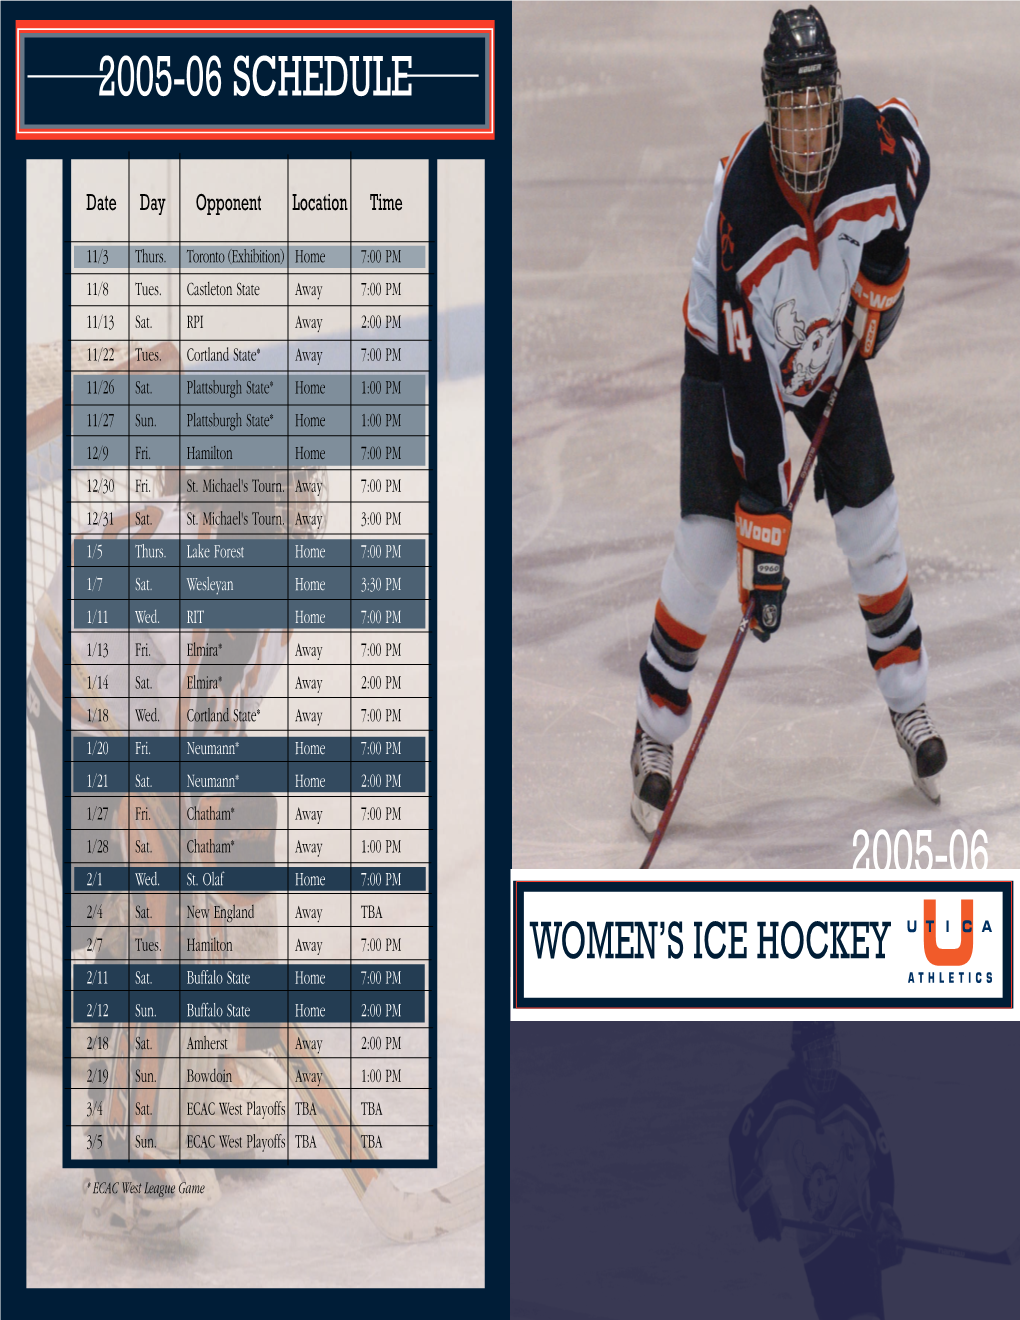 Women's Ice Hockey Guide 05-06